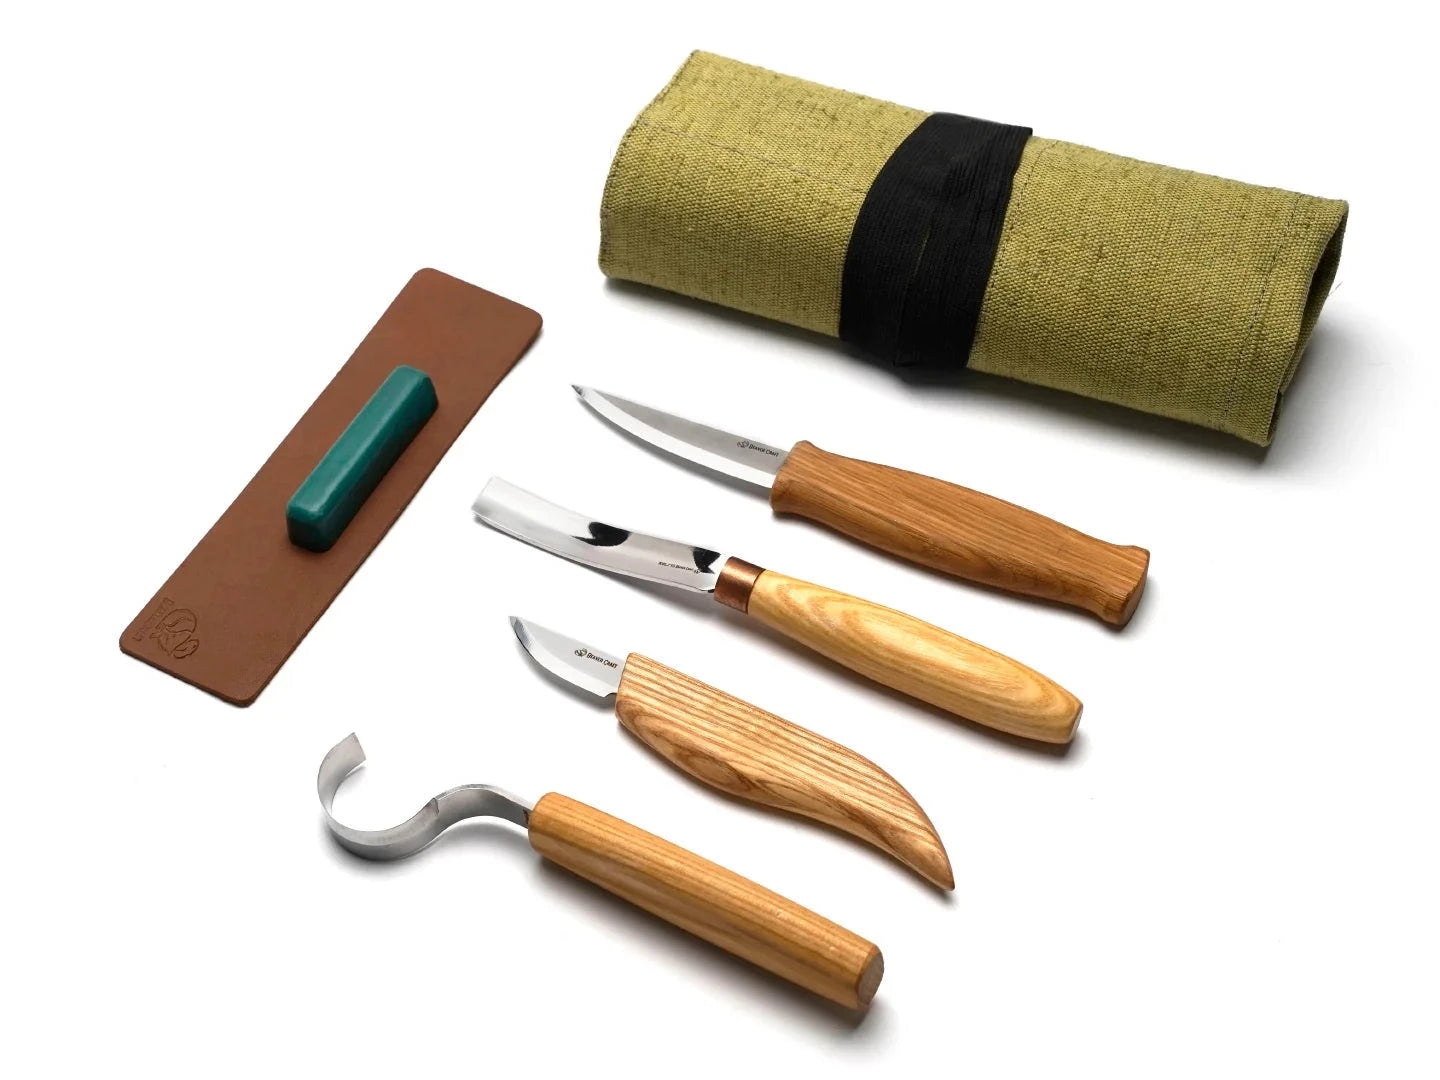 Buy S13X - Deluxe Spoon Carving Set With Walnut Handles online -  BeaverCraft – BeaverCraft Tools